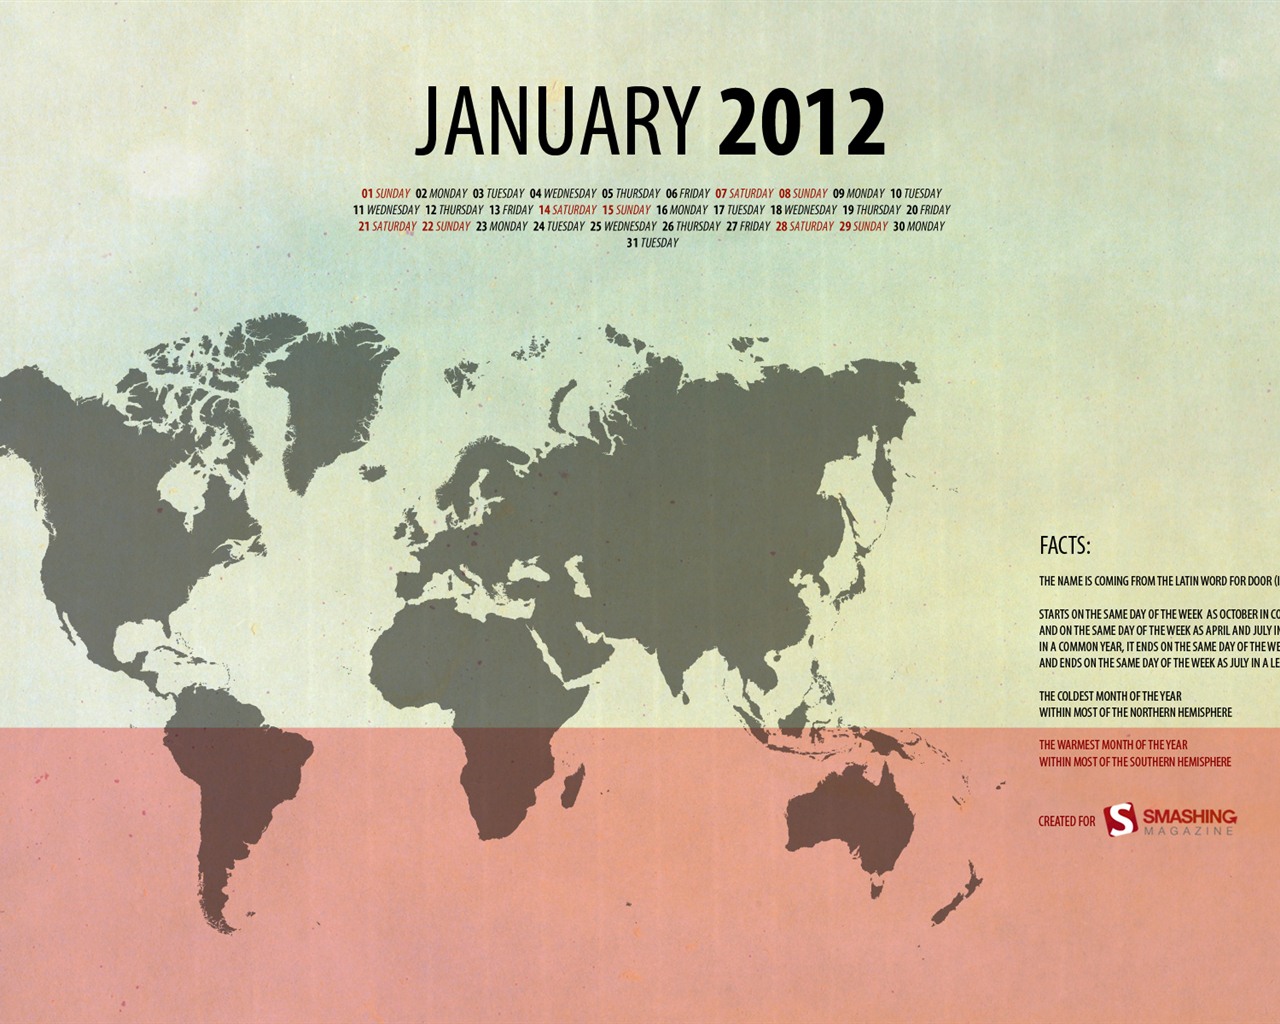 January 2012 Calendar Wallpapers #10 - 1280x1024